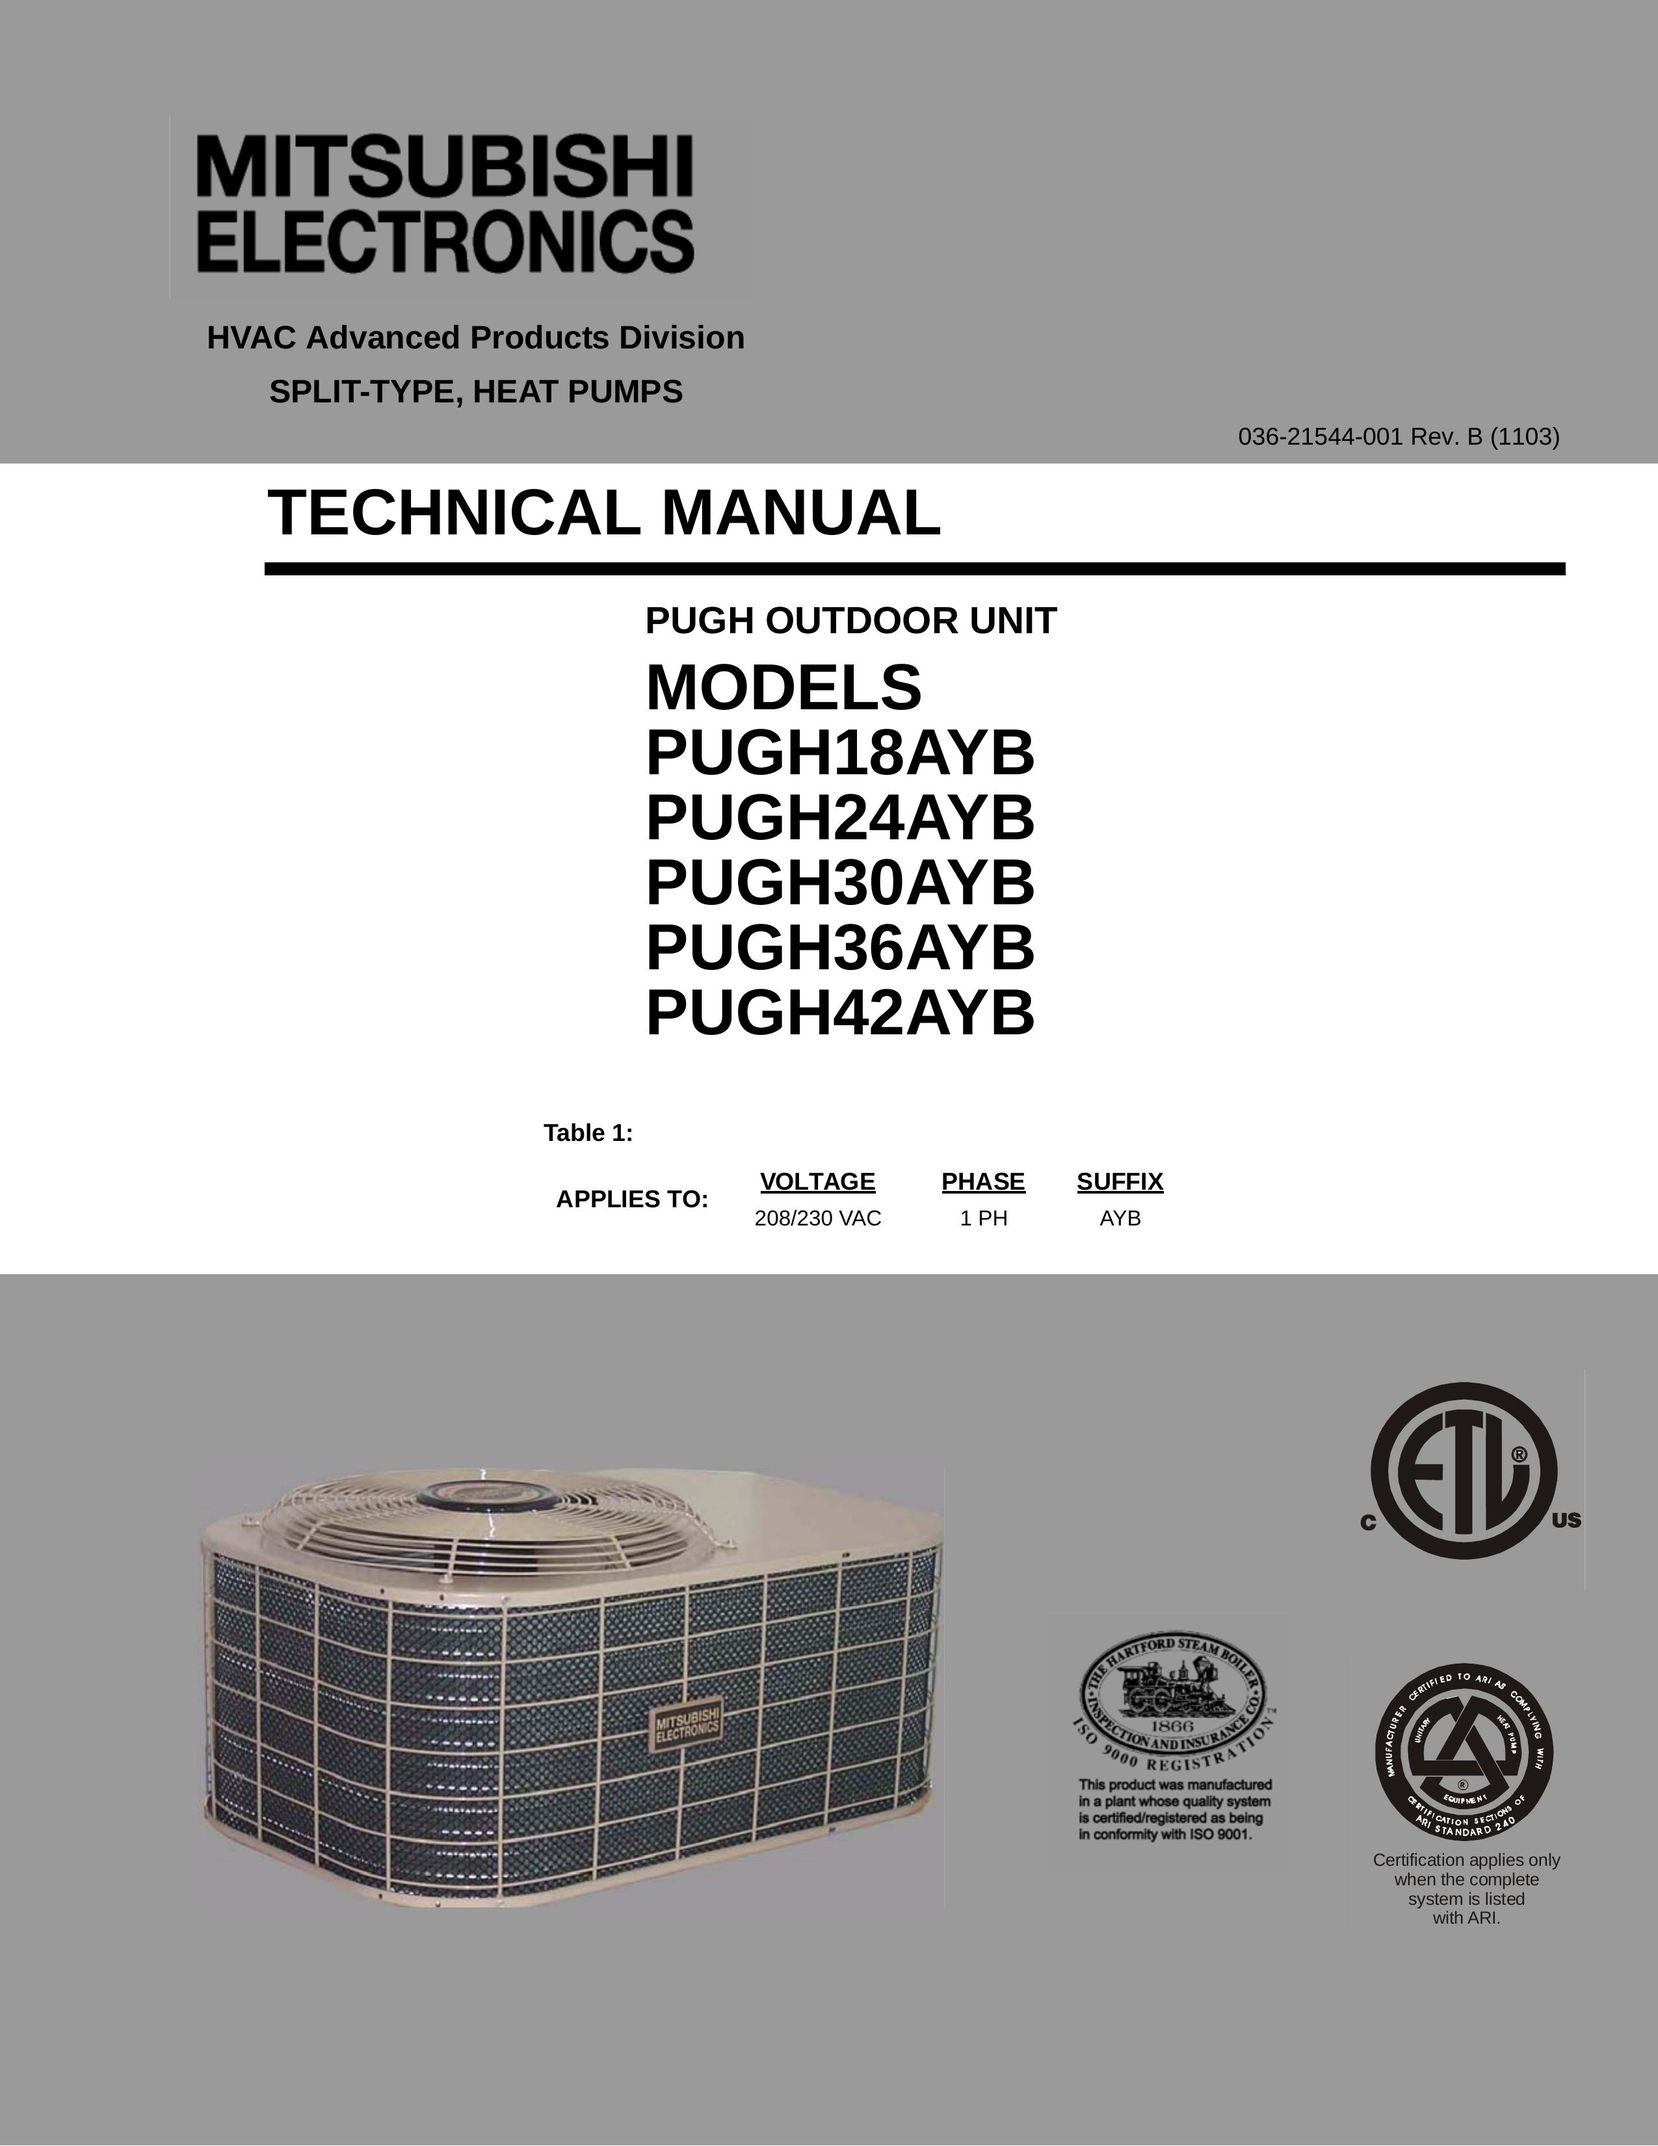 Mitsubishi Electronics PUGH24AYB Heat Pump User Manual